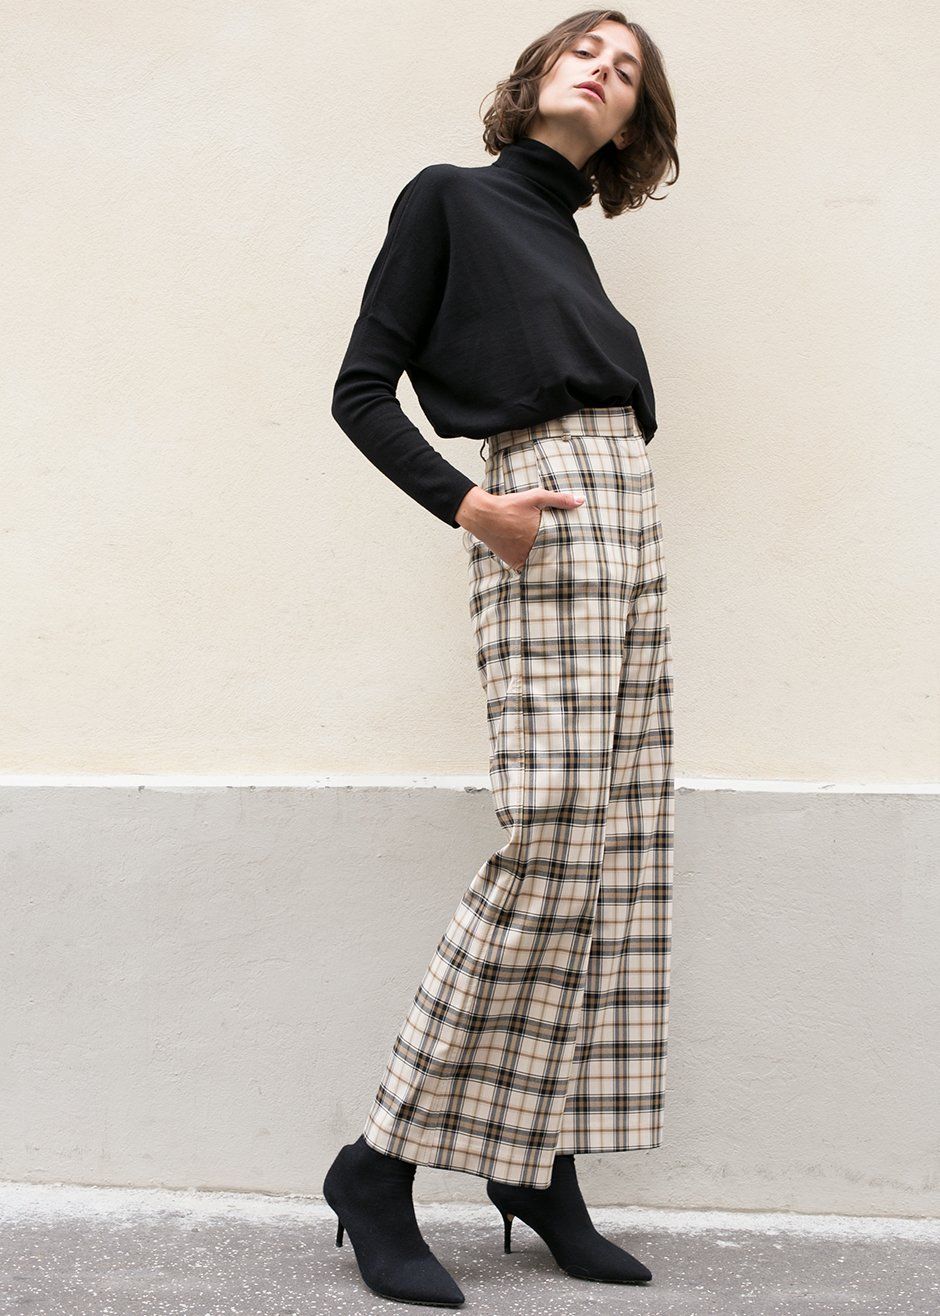 moda pantaloni tartan 2019, tendenza pantaloni check 2019